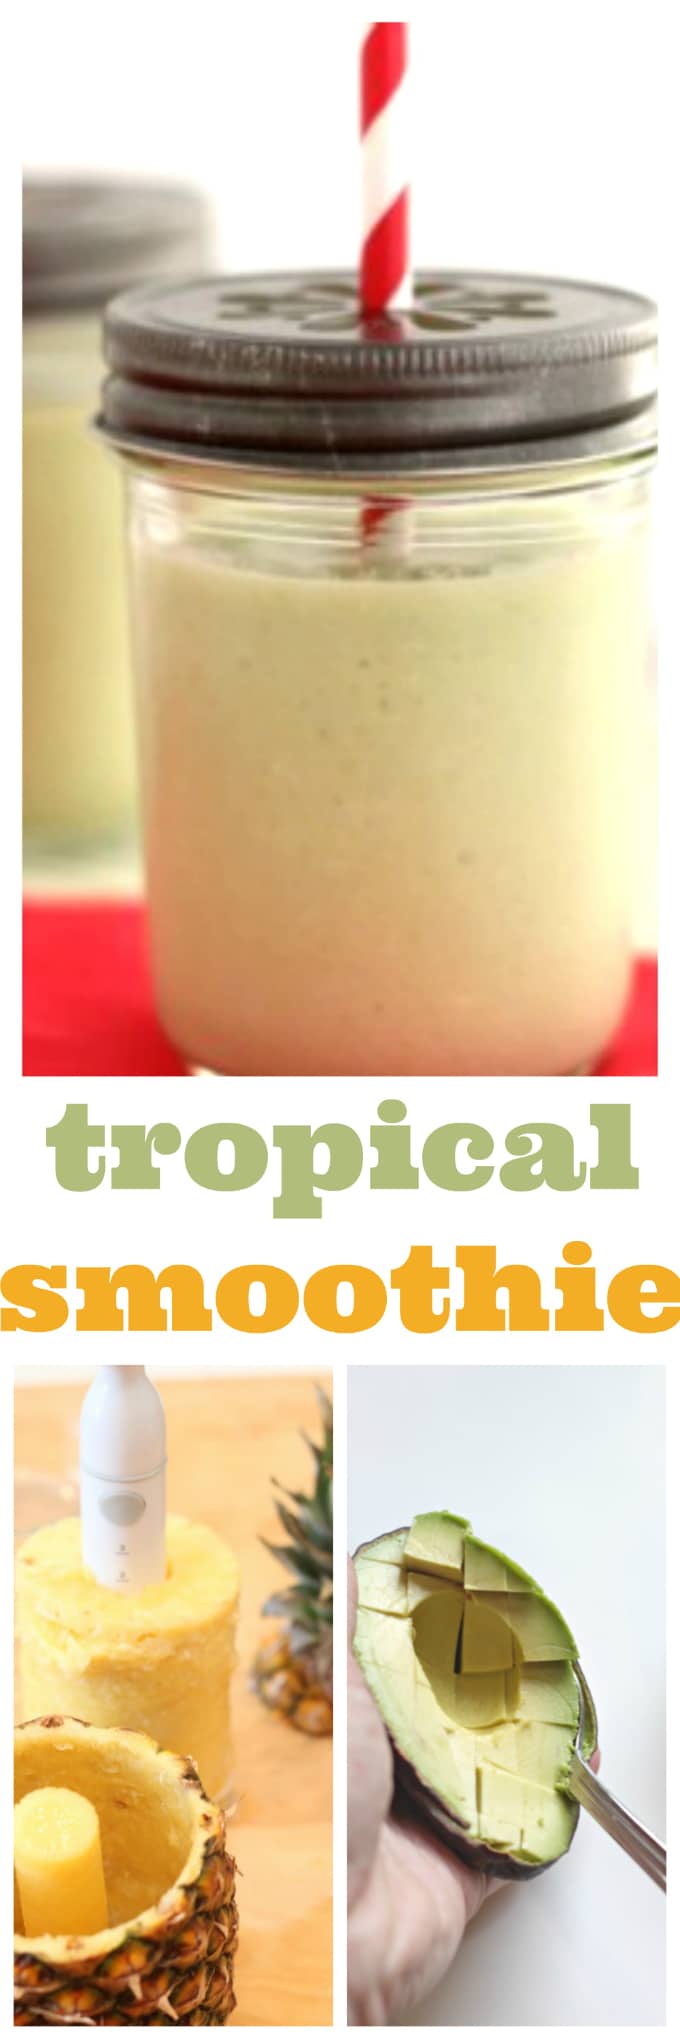 tropical smoothie @createdbydiane